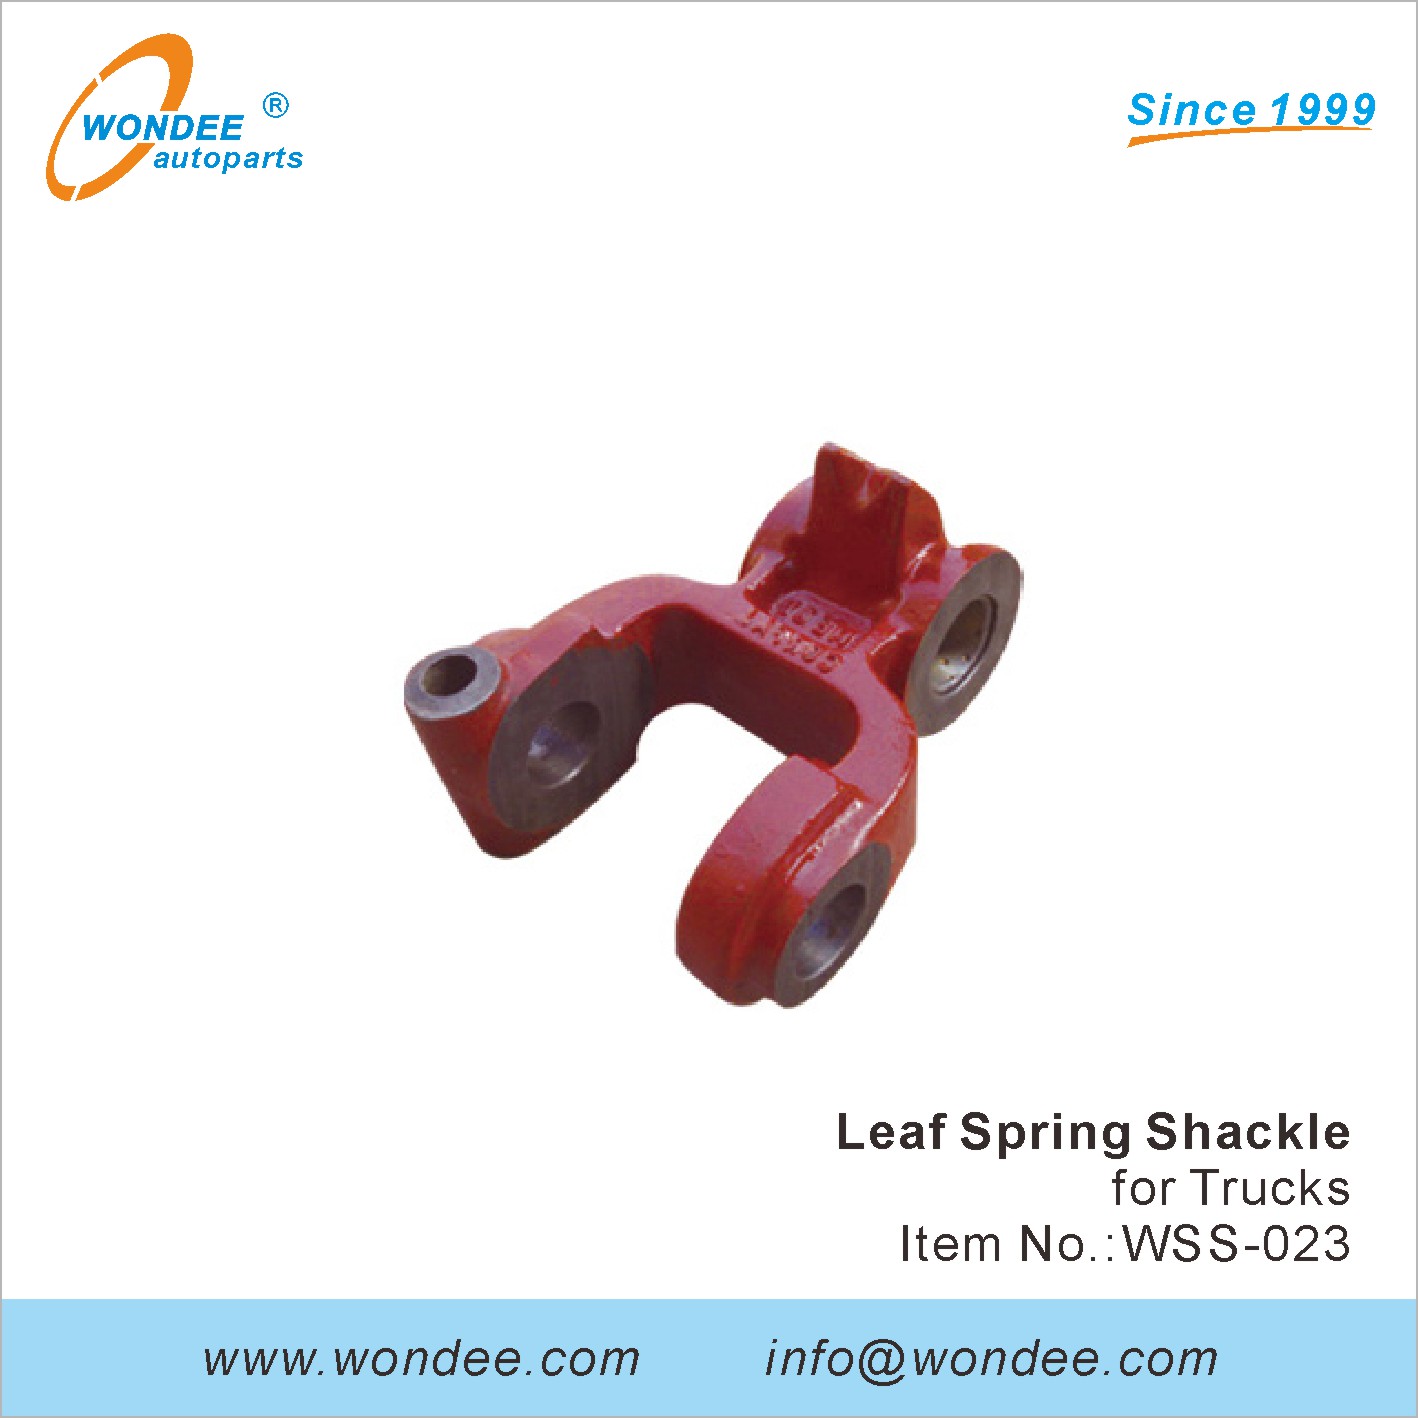 WONDEE leaf spring shackle (23)